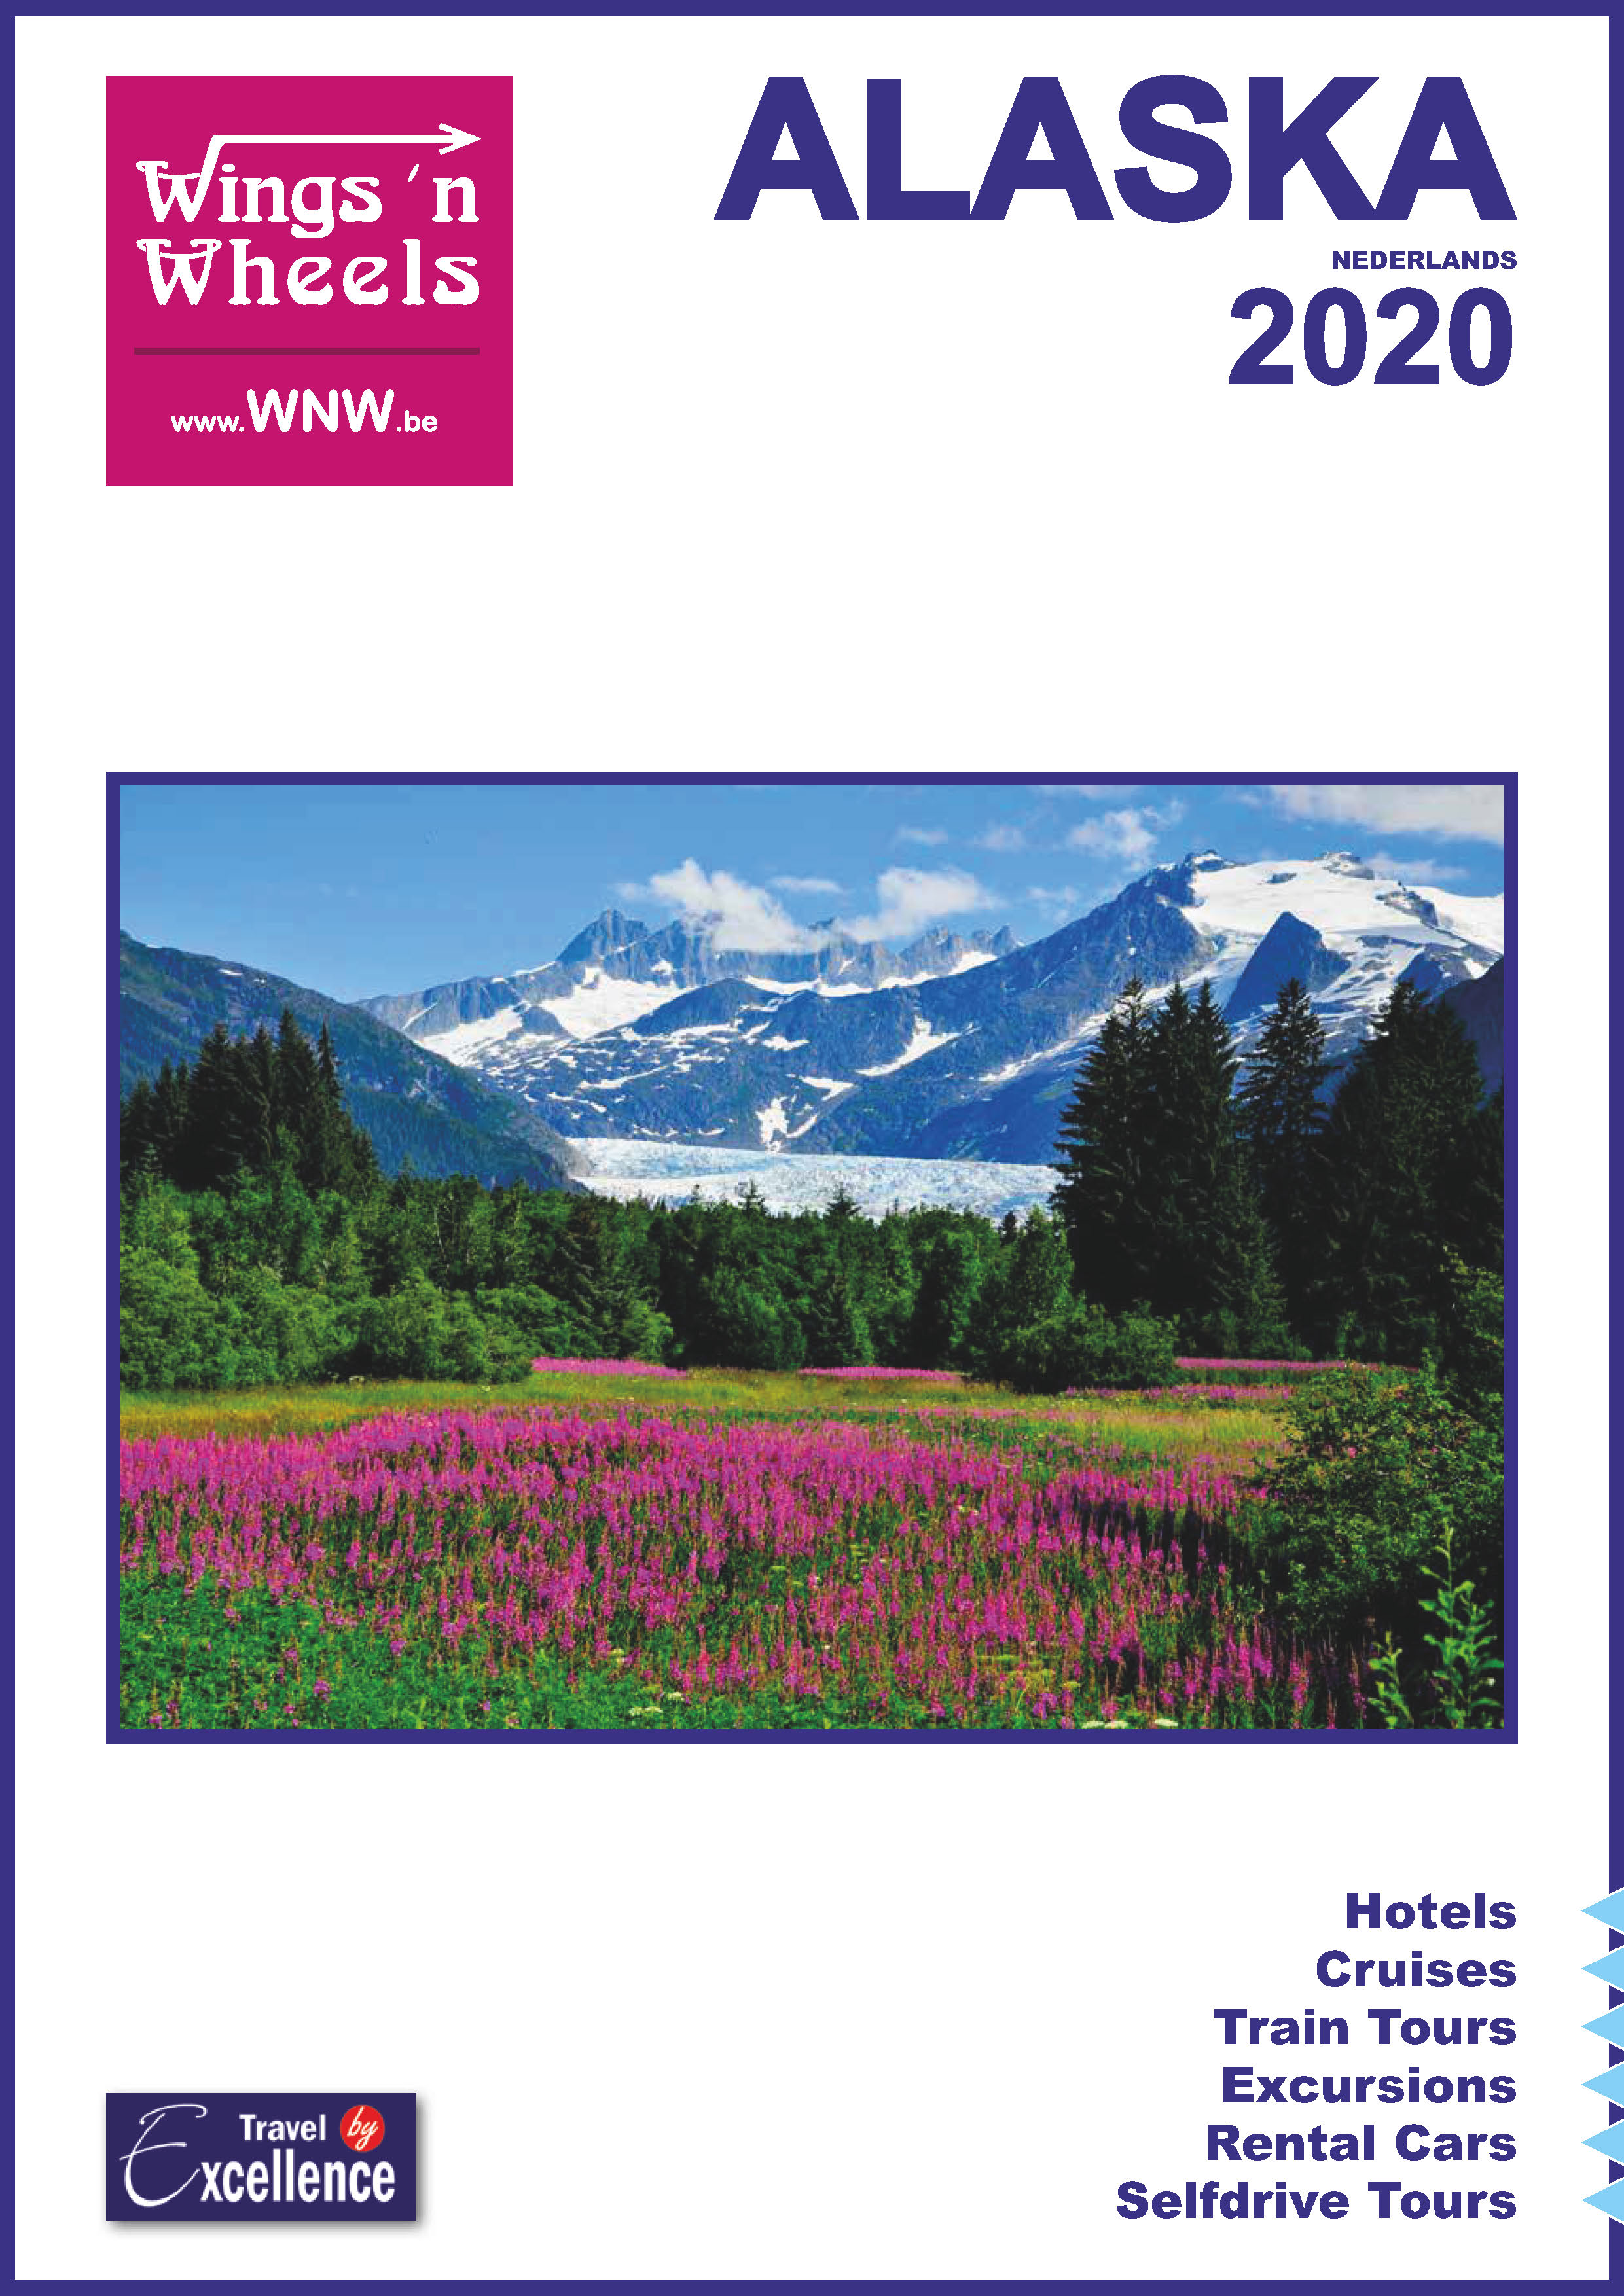 Alaska Brochure pages